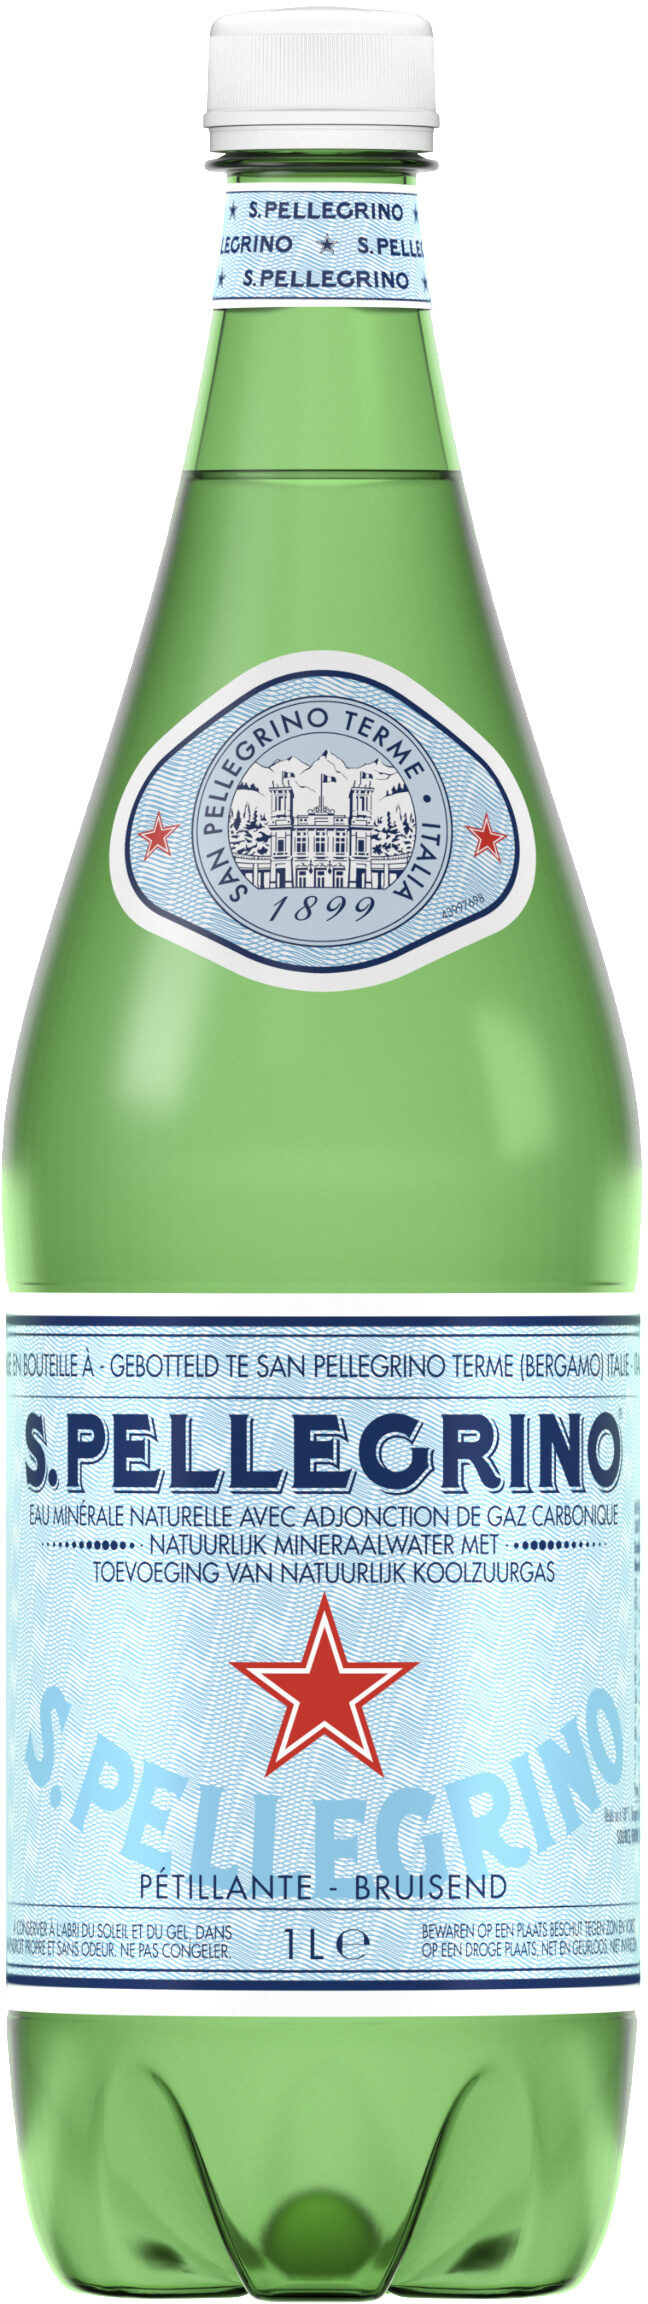 S. Pellegrino Water - Product - en